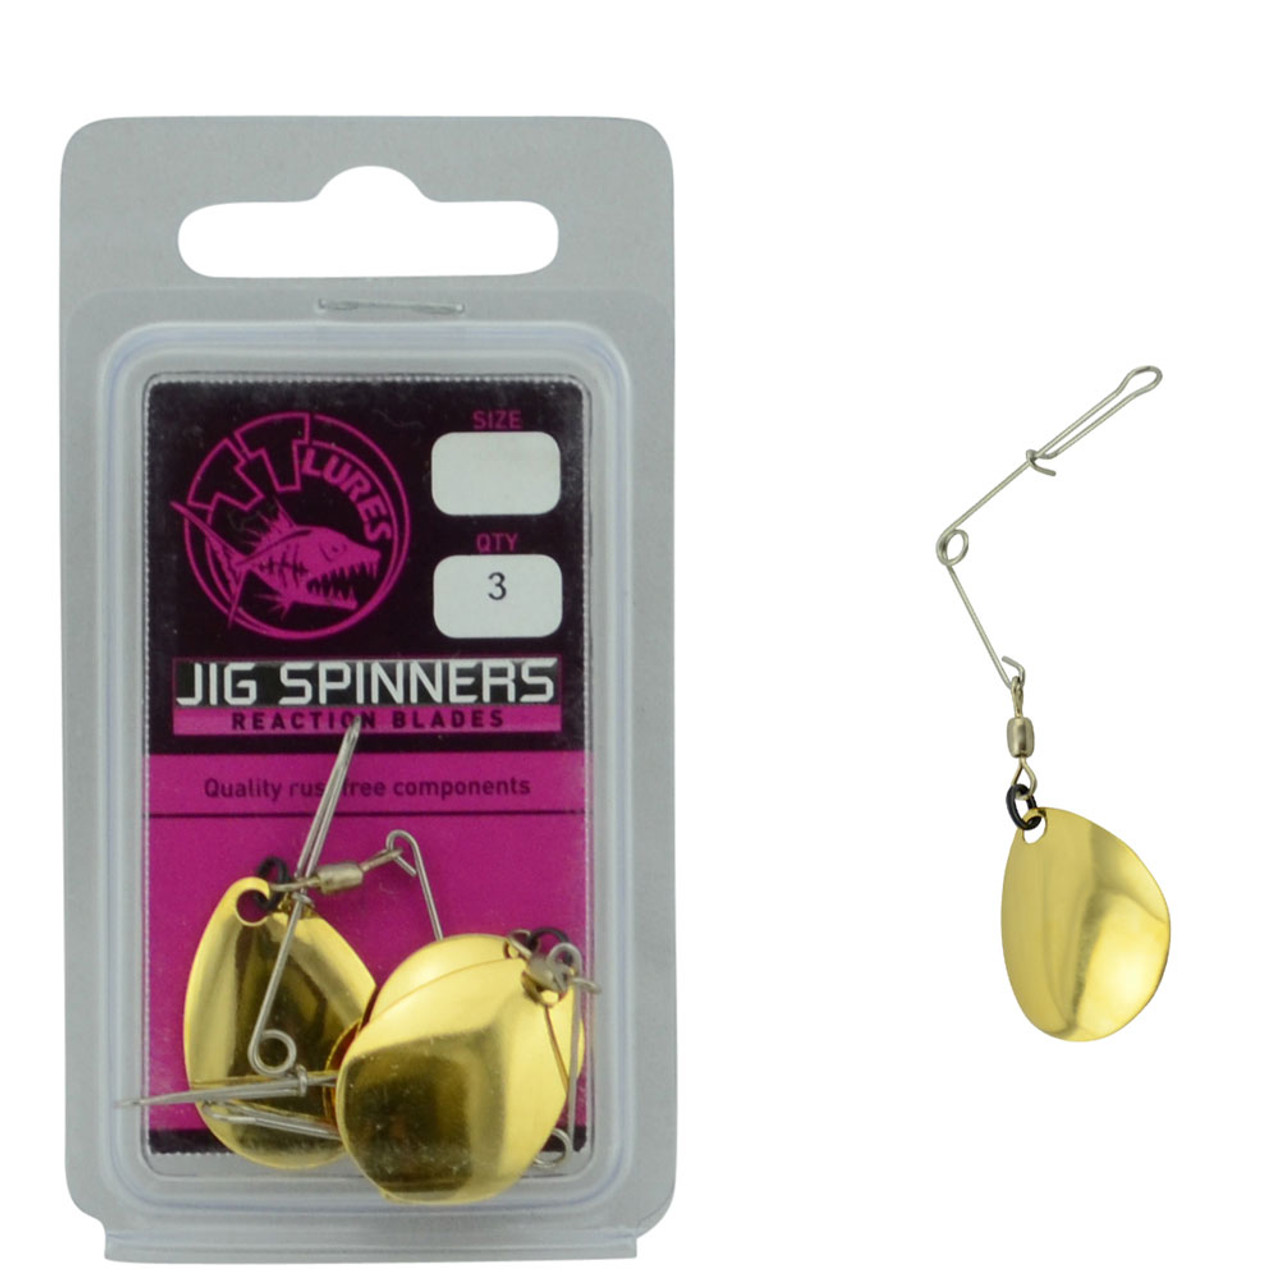 TT Jig Spinners (Packet of 3)